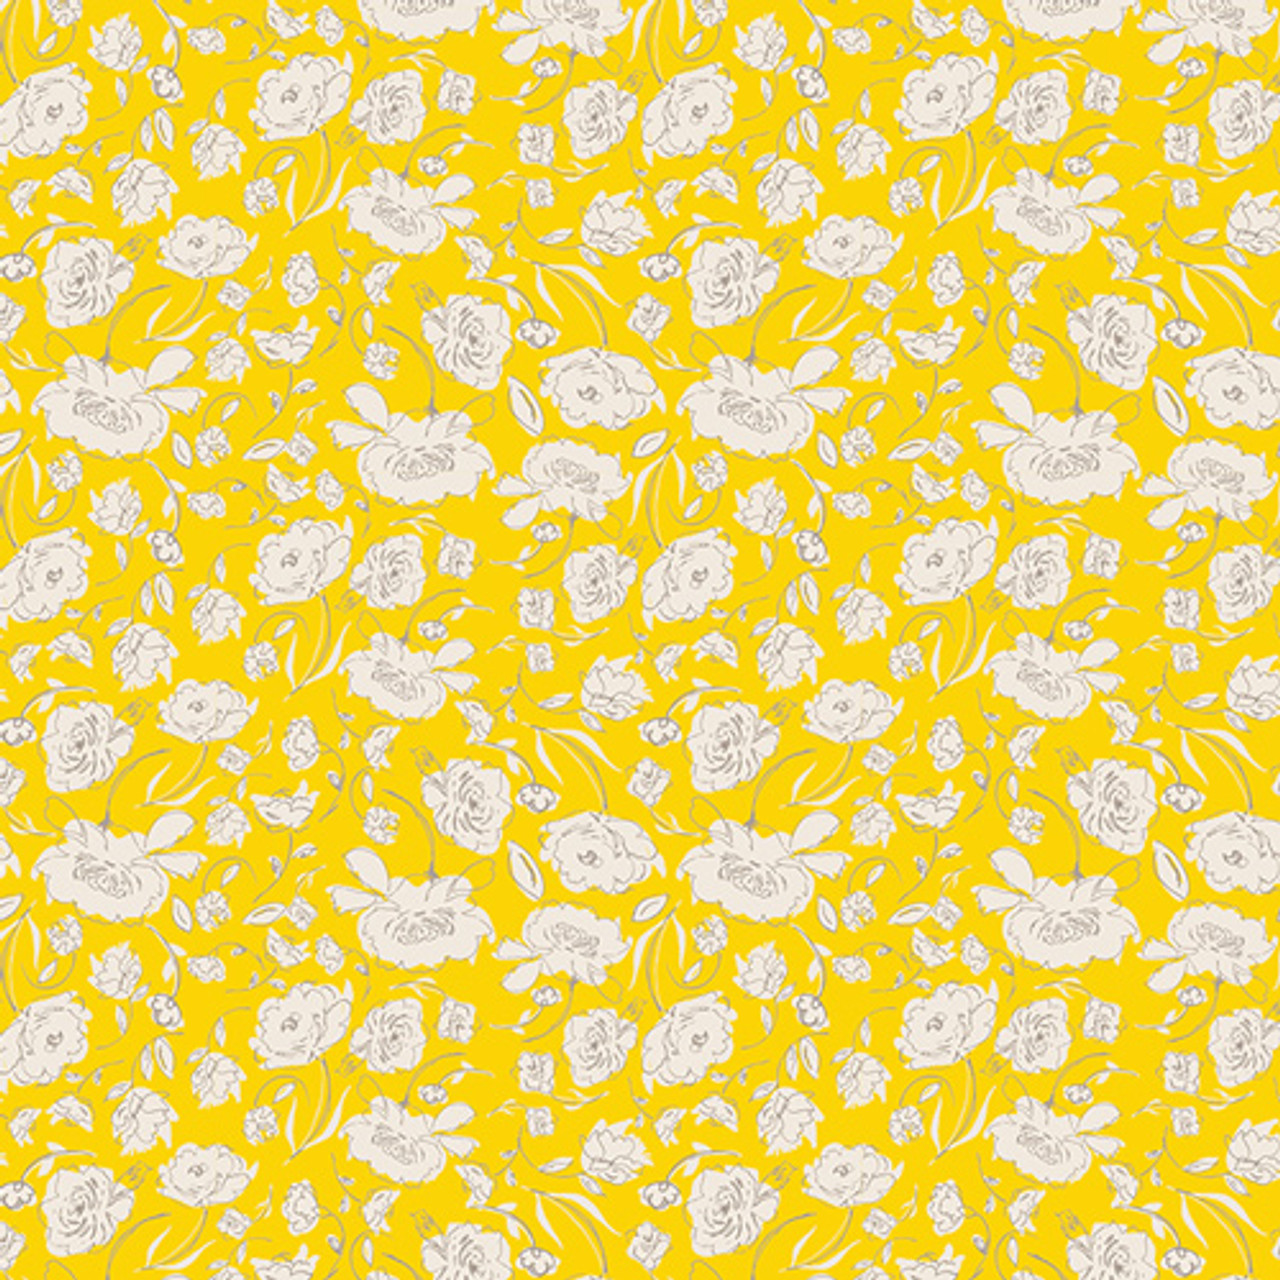 Clementine Fabric #9 - Wonderful Things : Blooming Brook - Sol